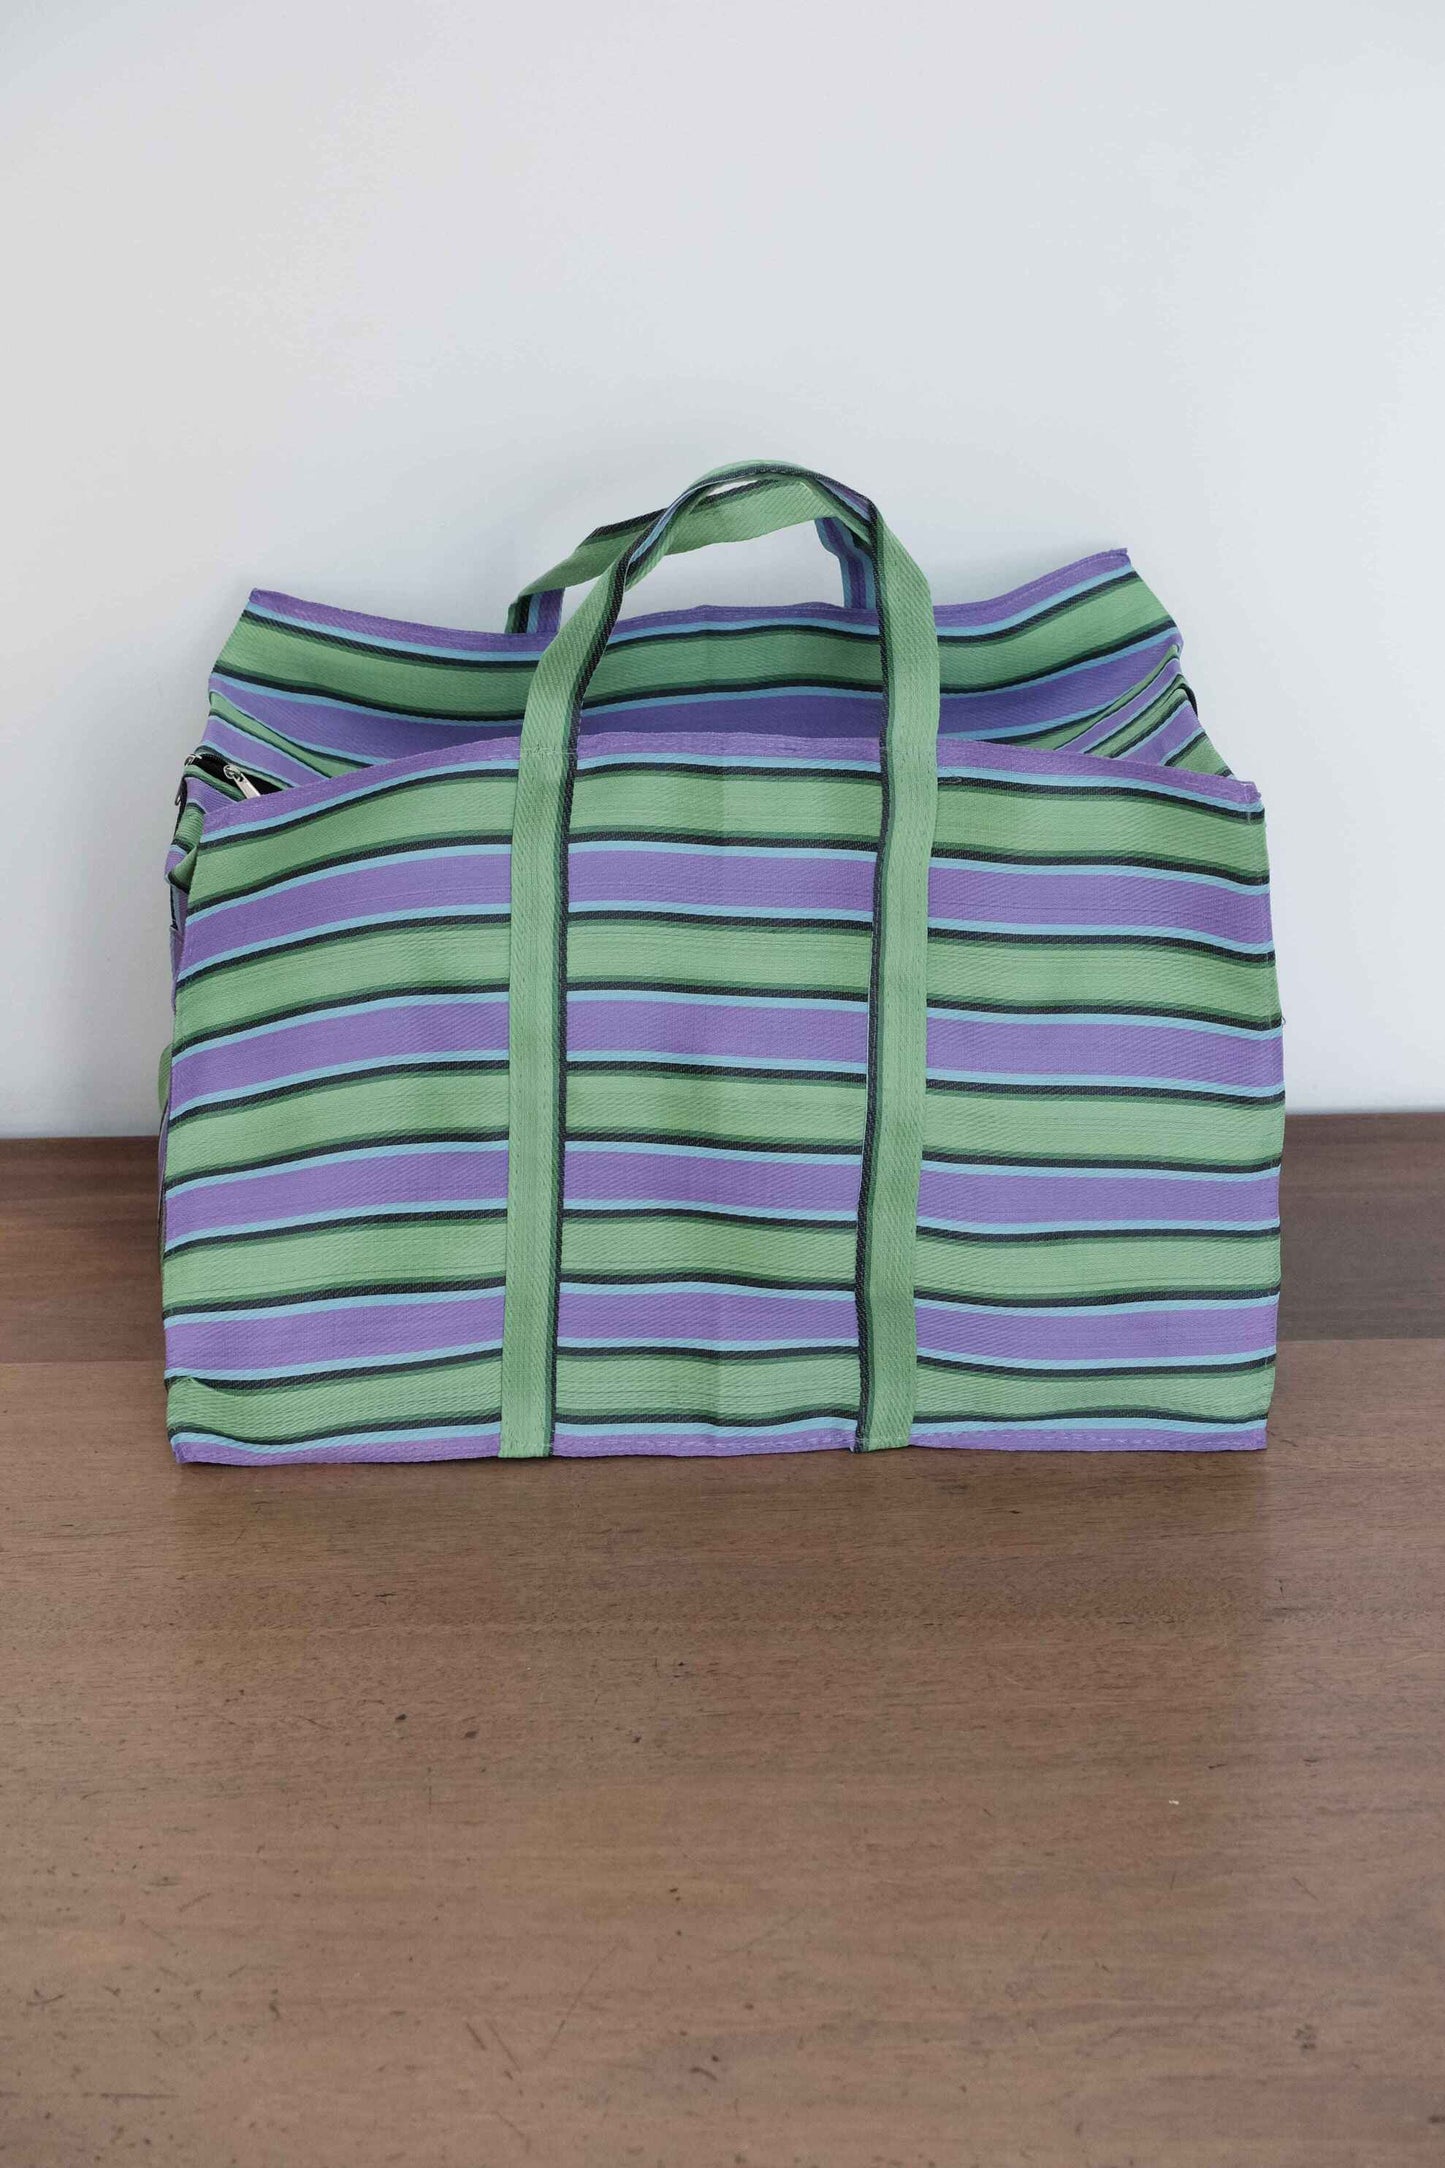 Stripe Bag - Large Size